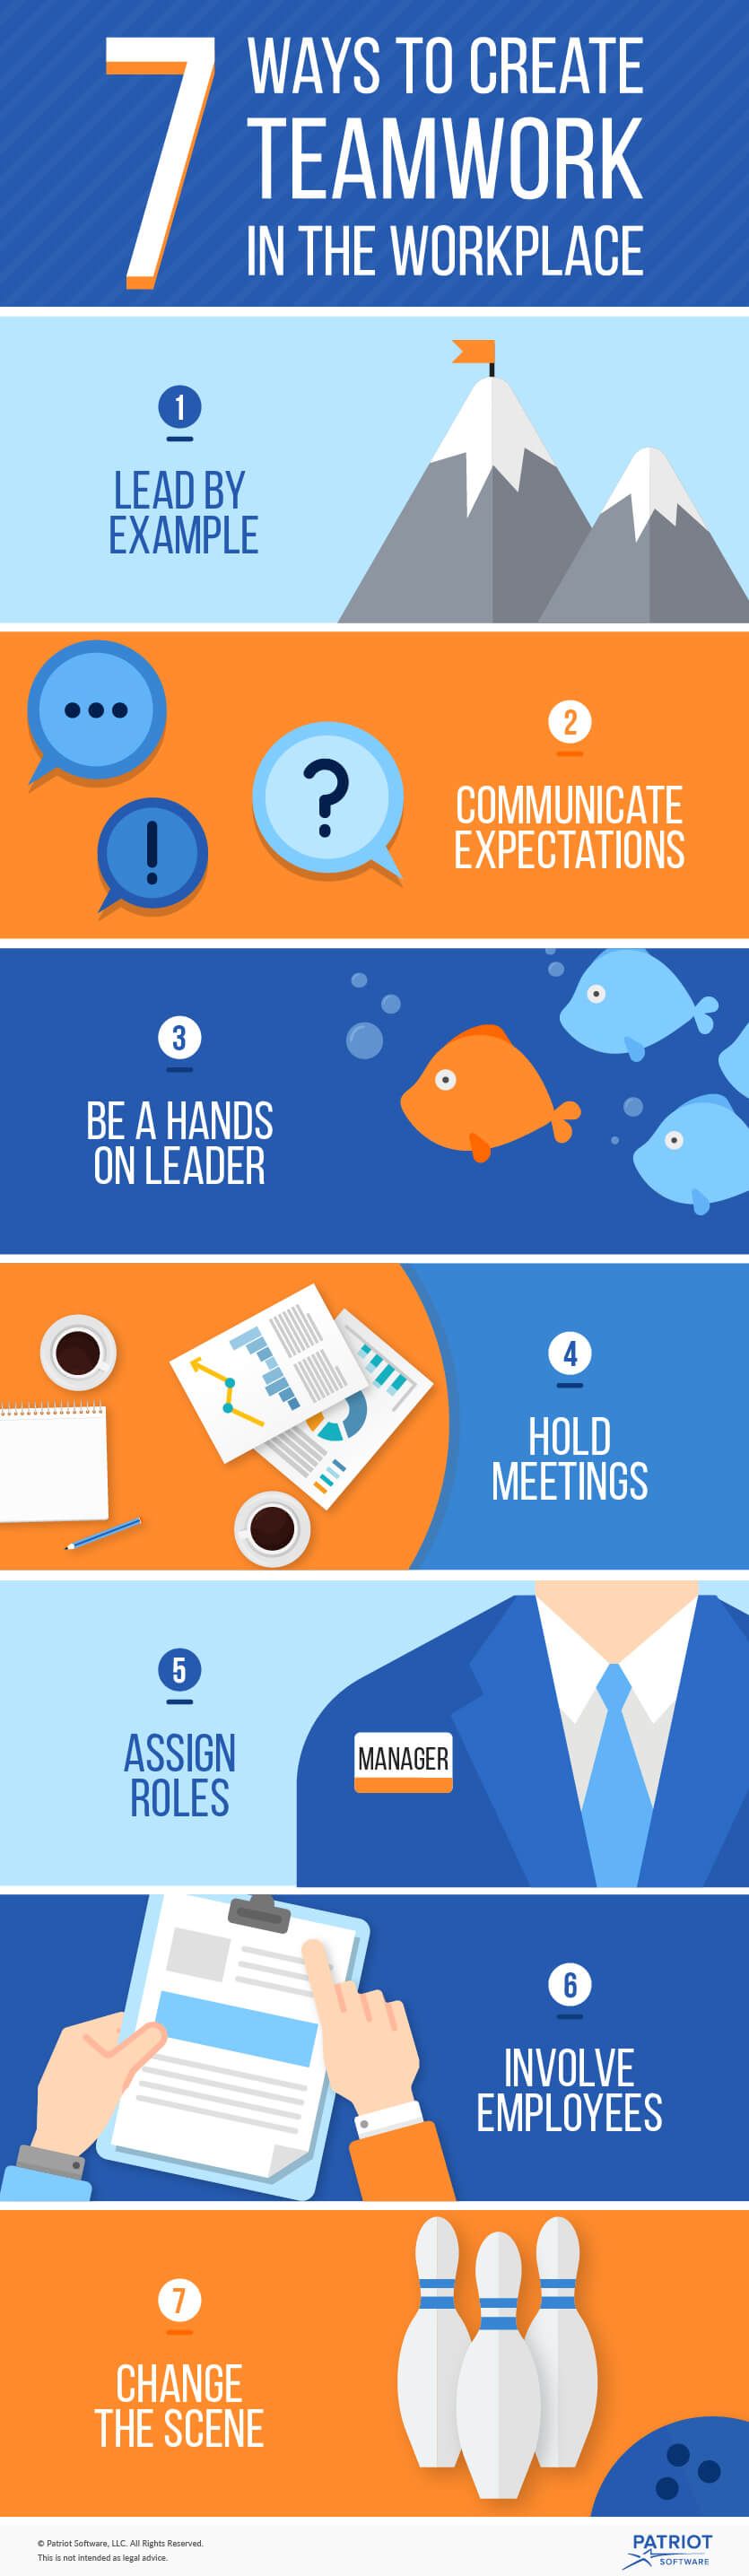 Create teamwork in the workplace.